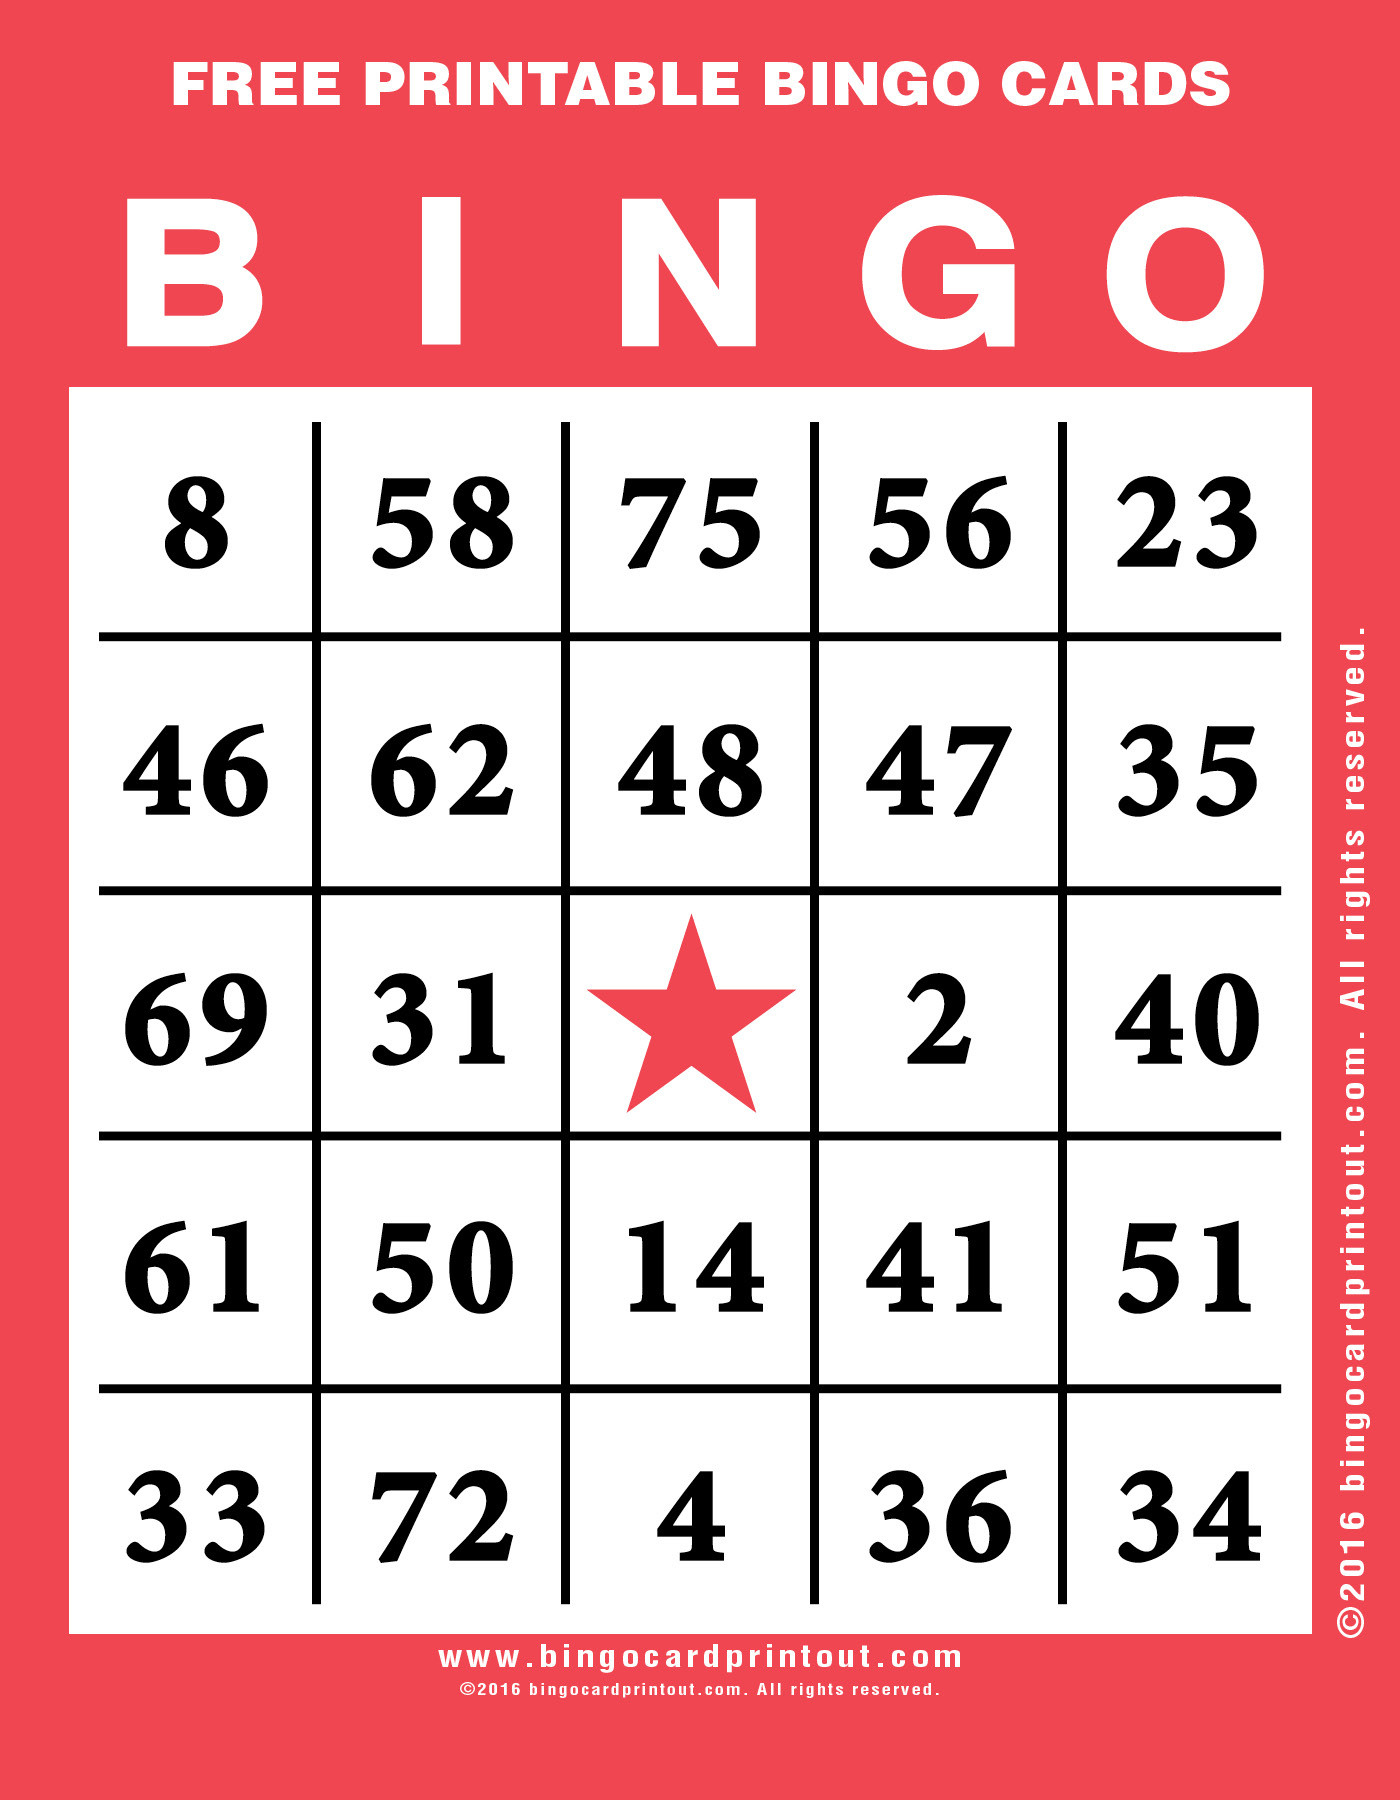 Free Printable Bingo Cards 1 75 | Cardide.co - Free Printable Bingo Cards 1 75